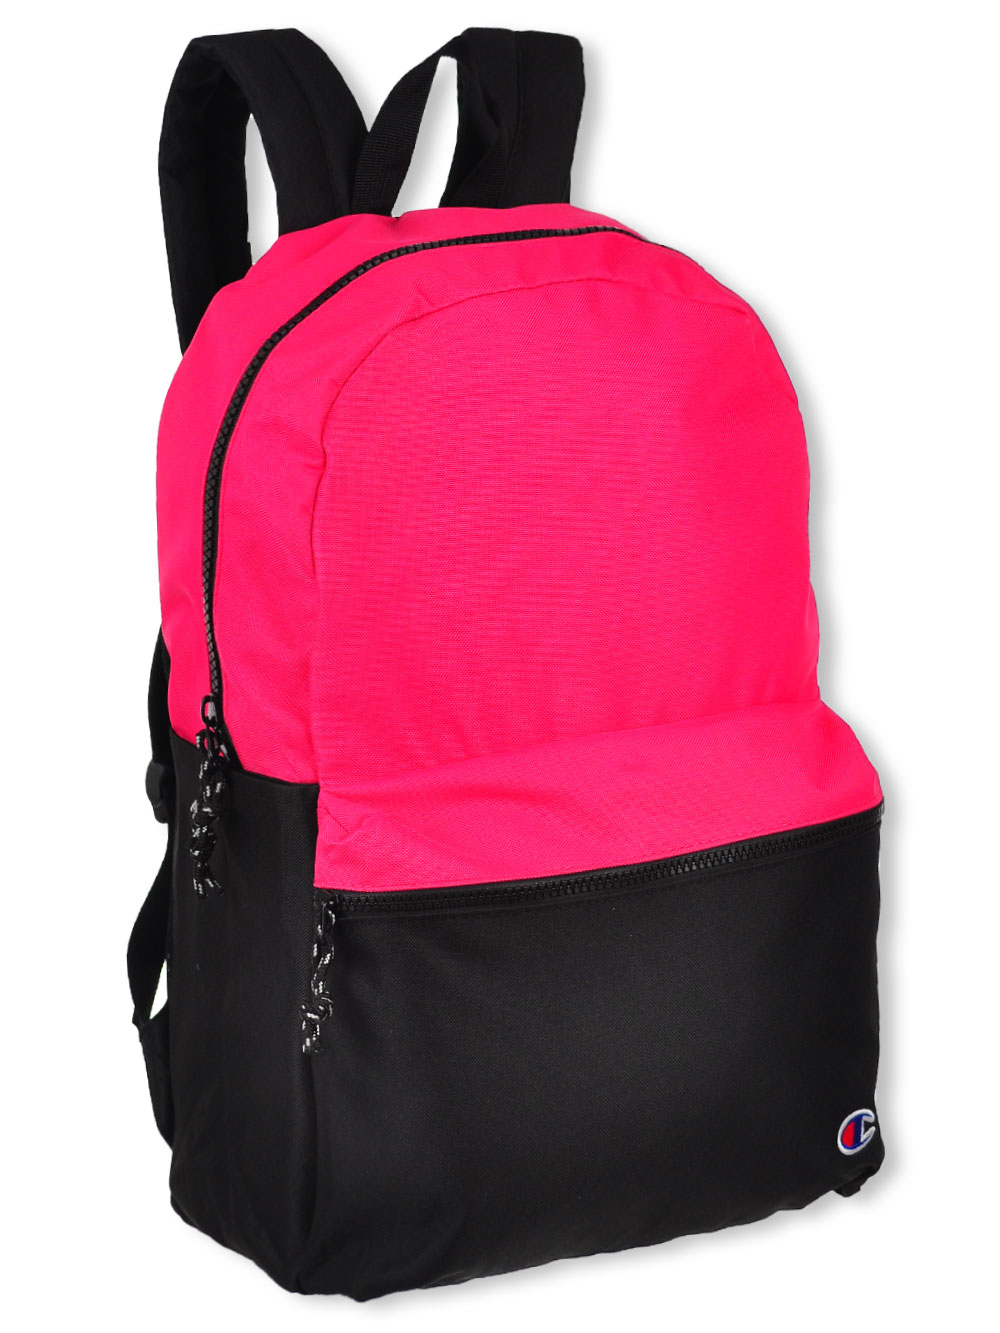 burgundy champion backpack